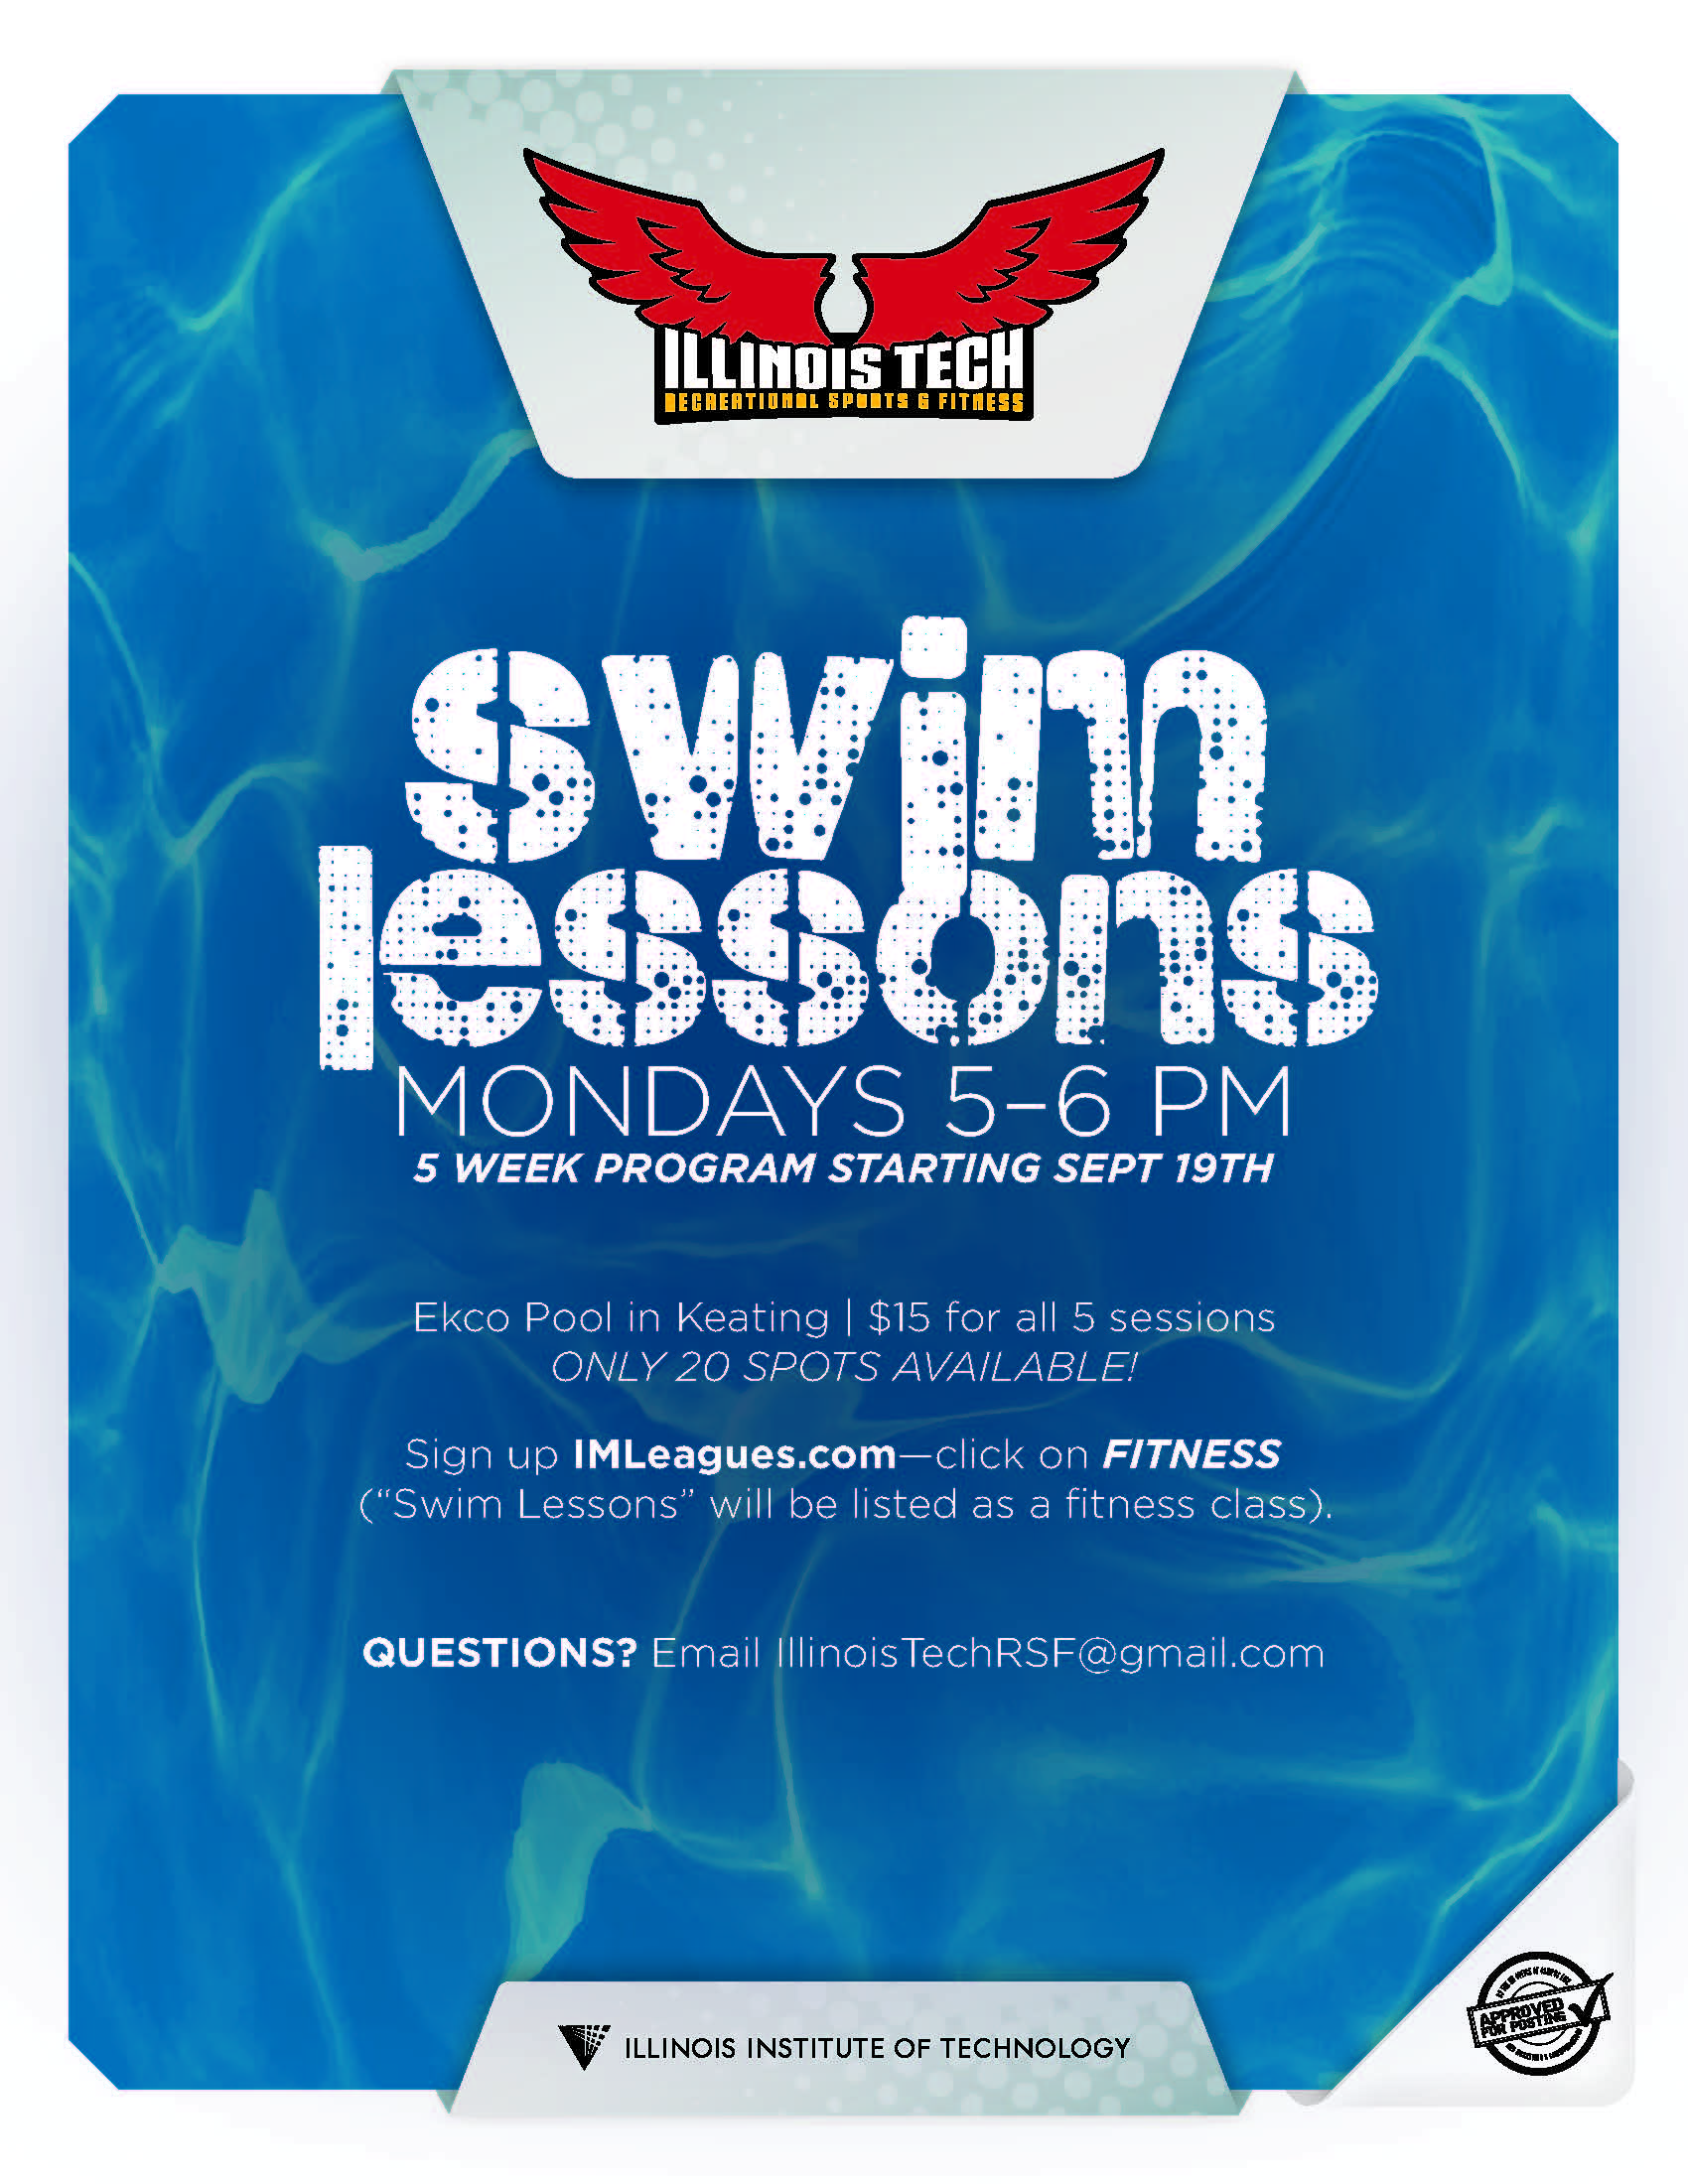 ATH_5351_Flyer_for_Swim_Lessons_r1 JPEG.jpg